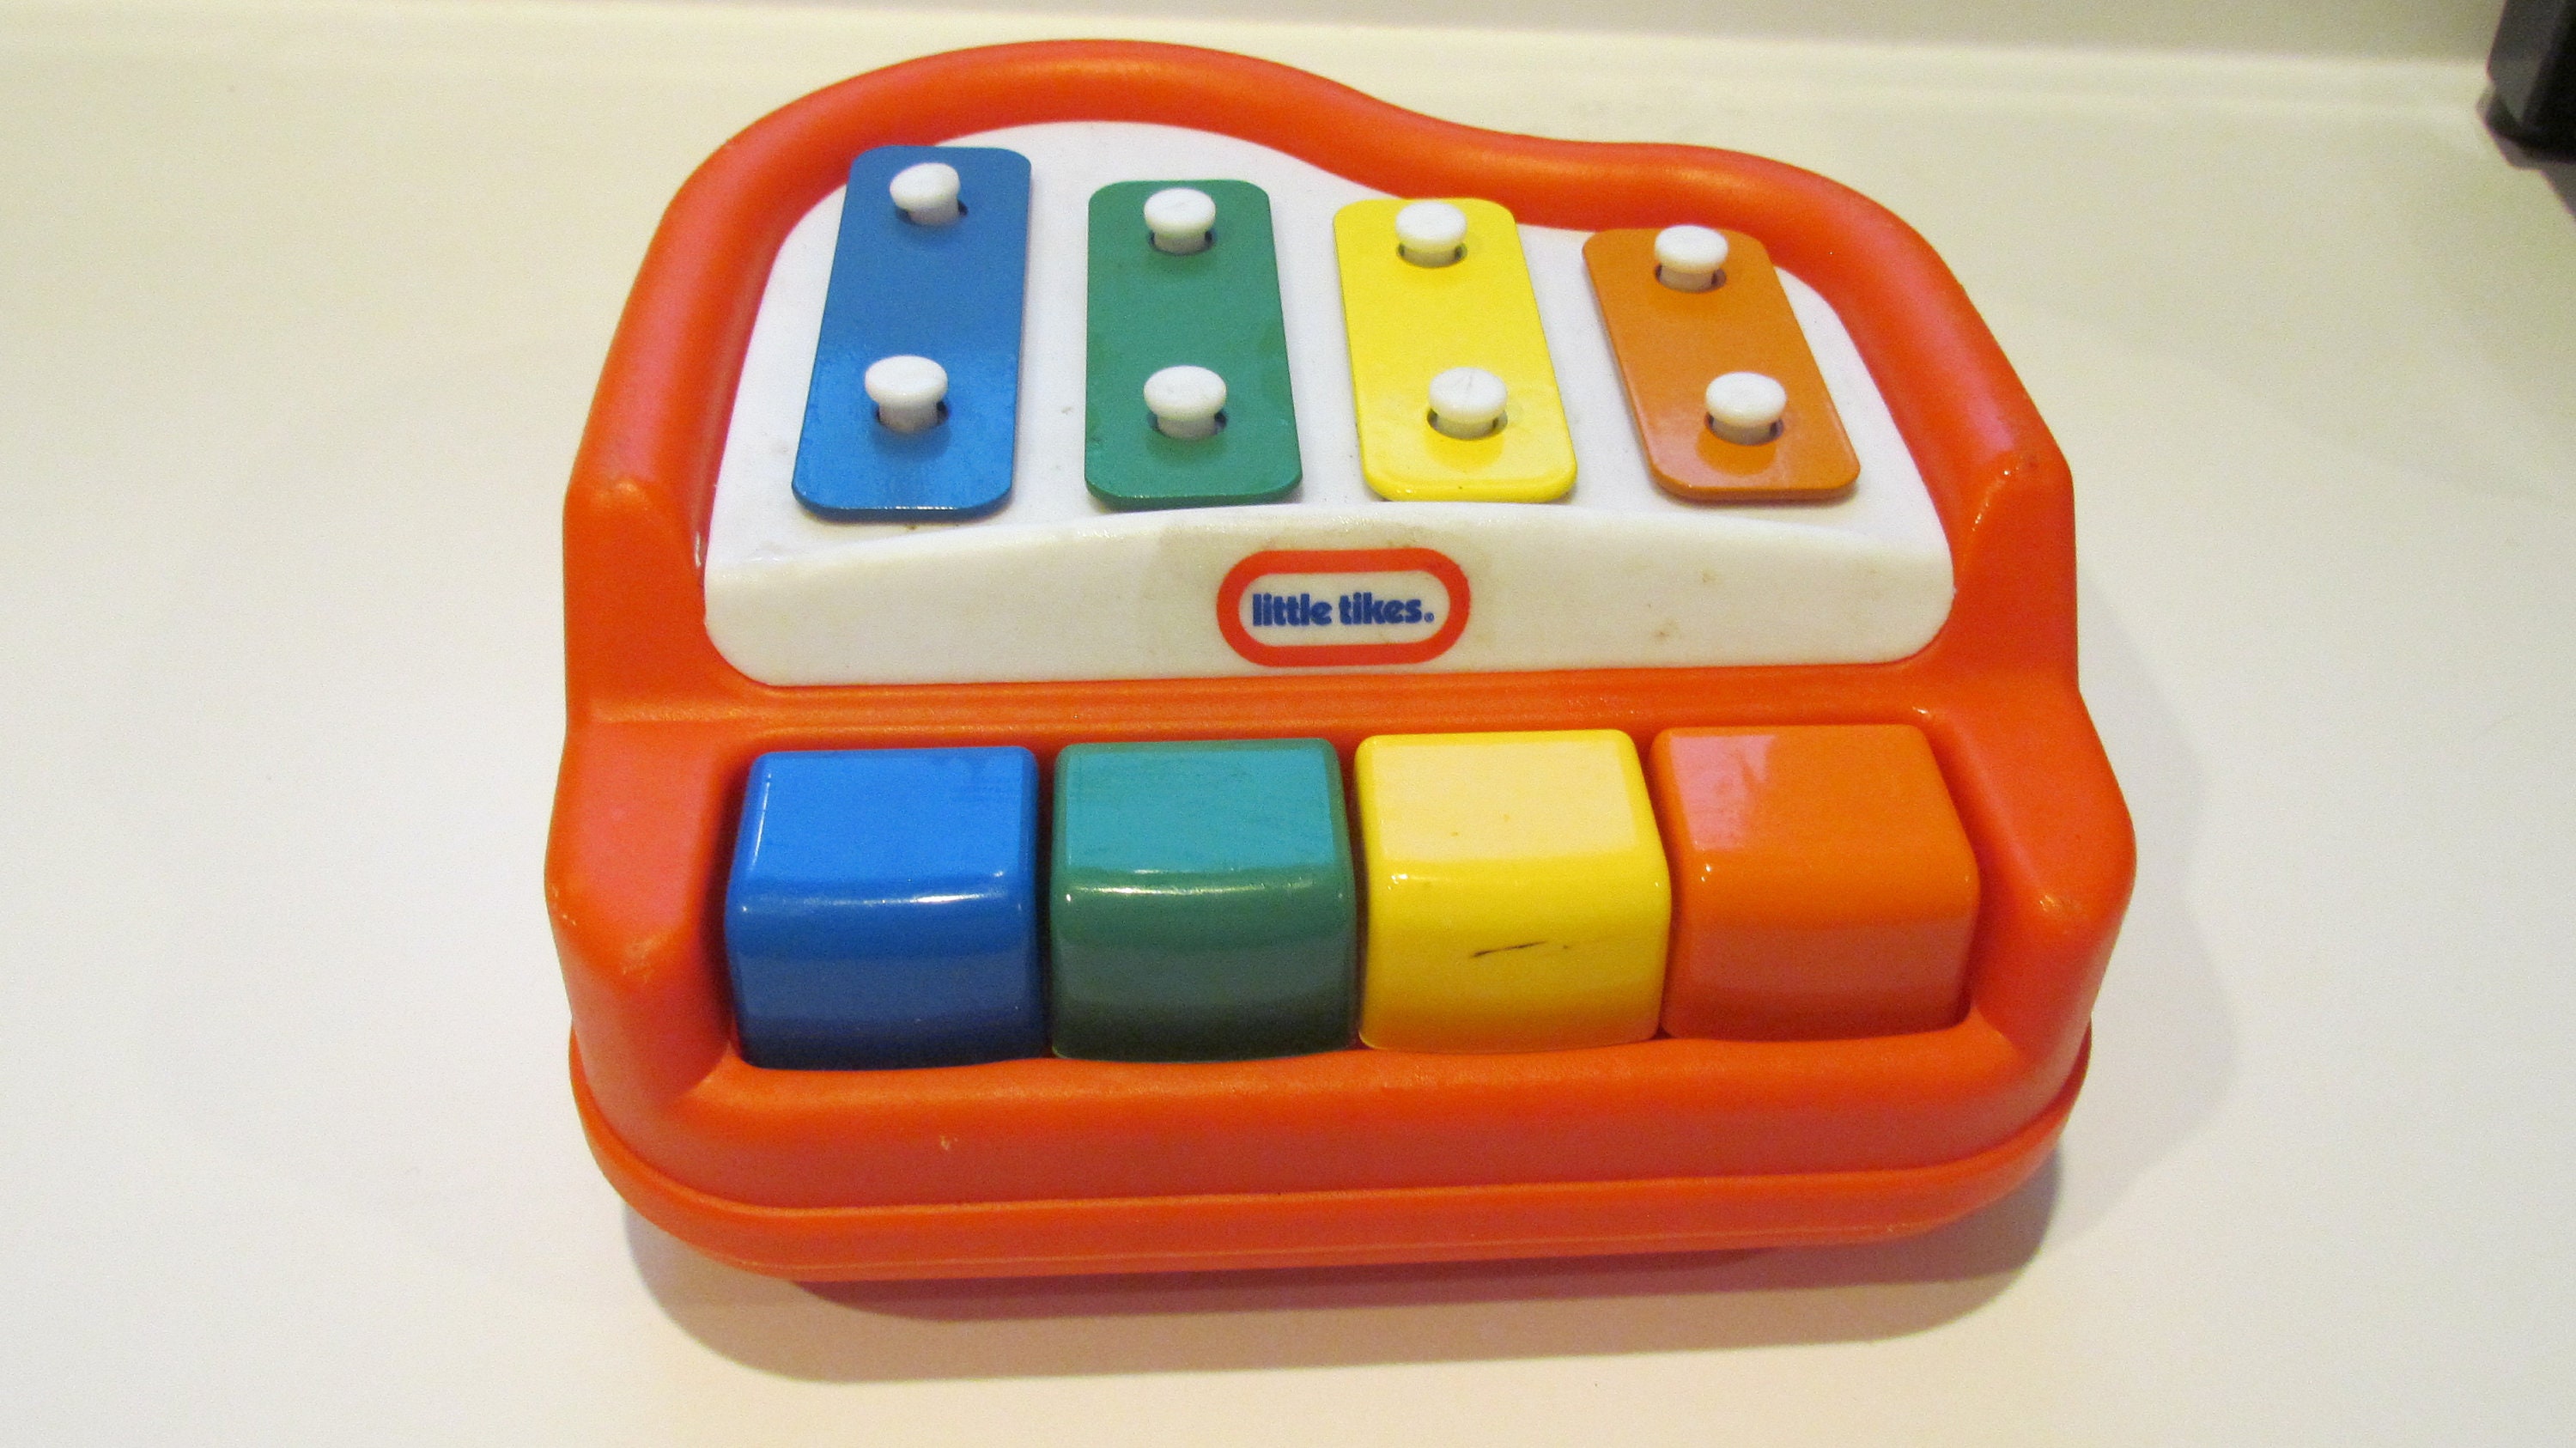 Little Tikes Tap-A-Tune - Juguete de piano para bebé